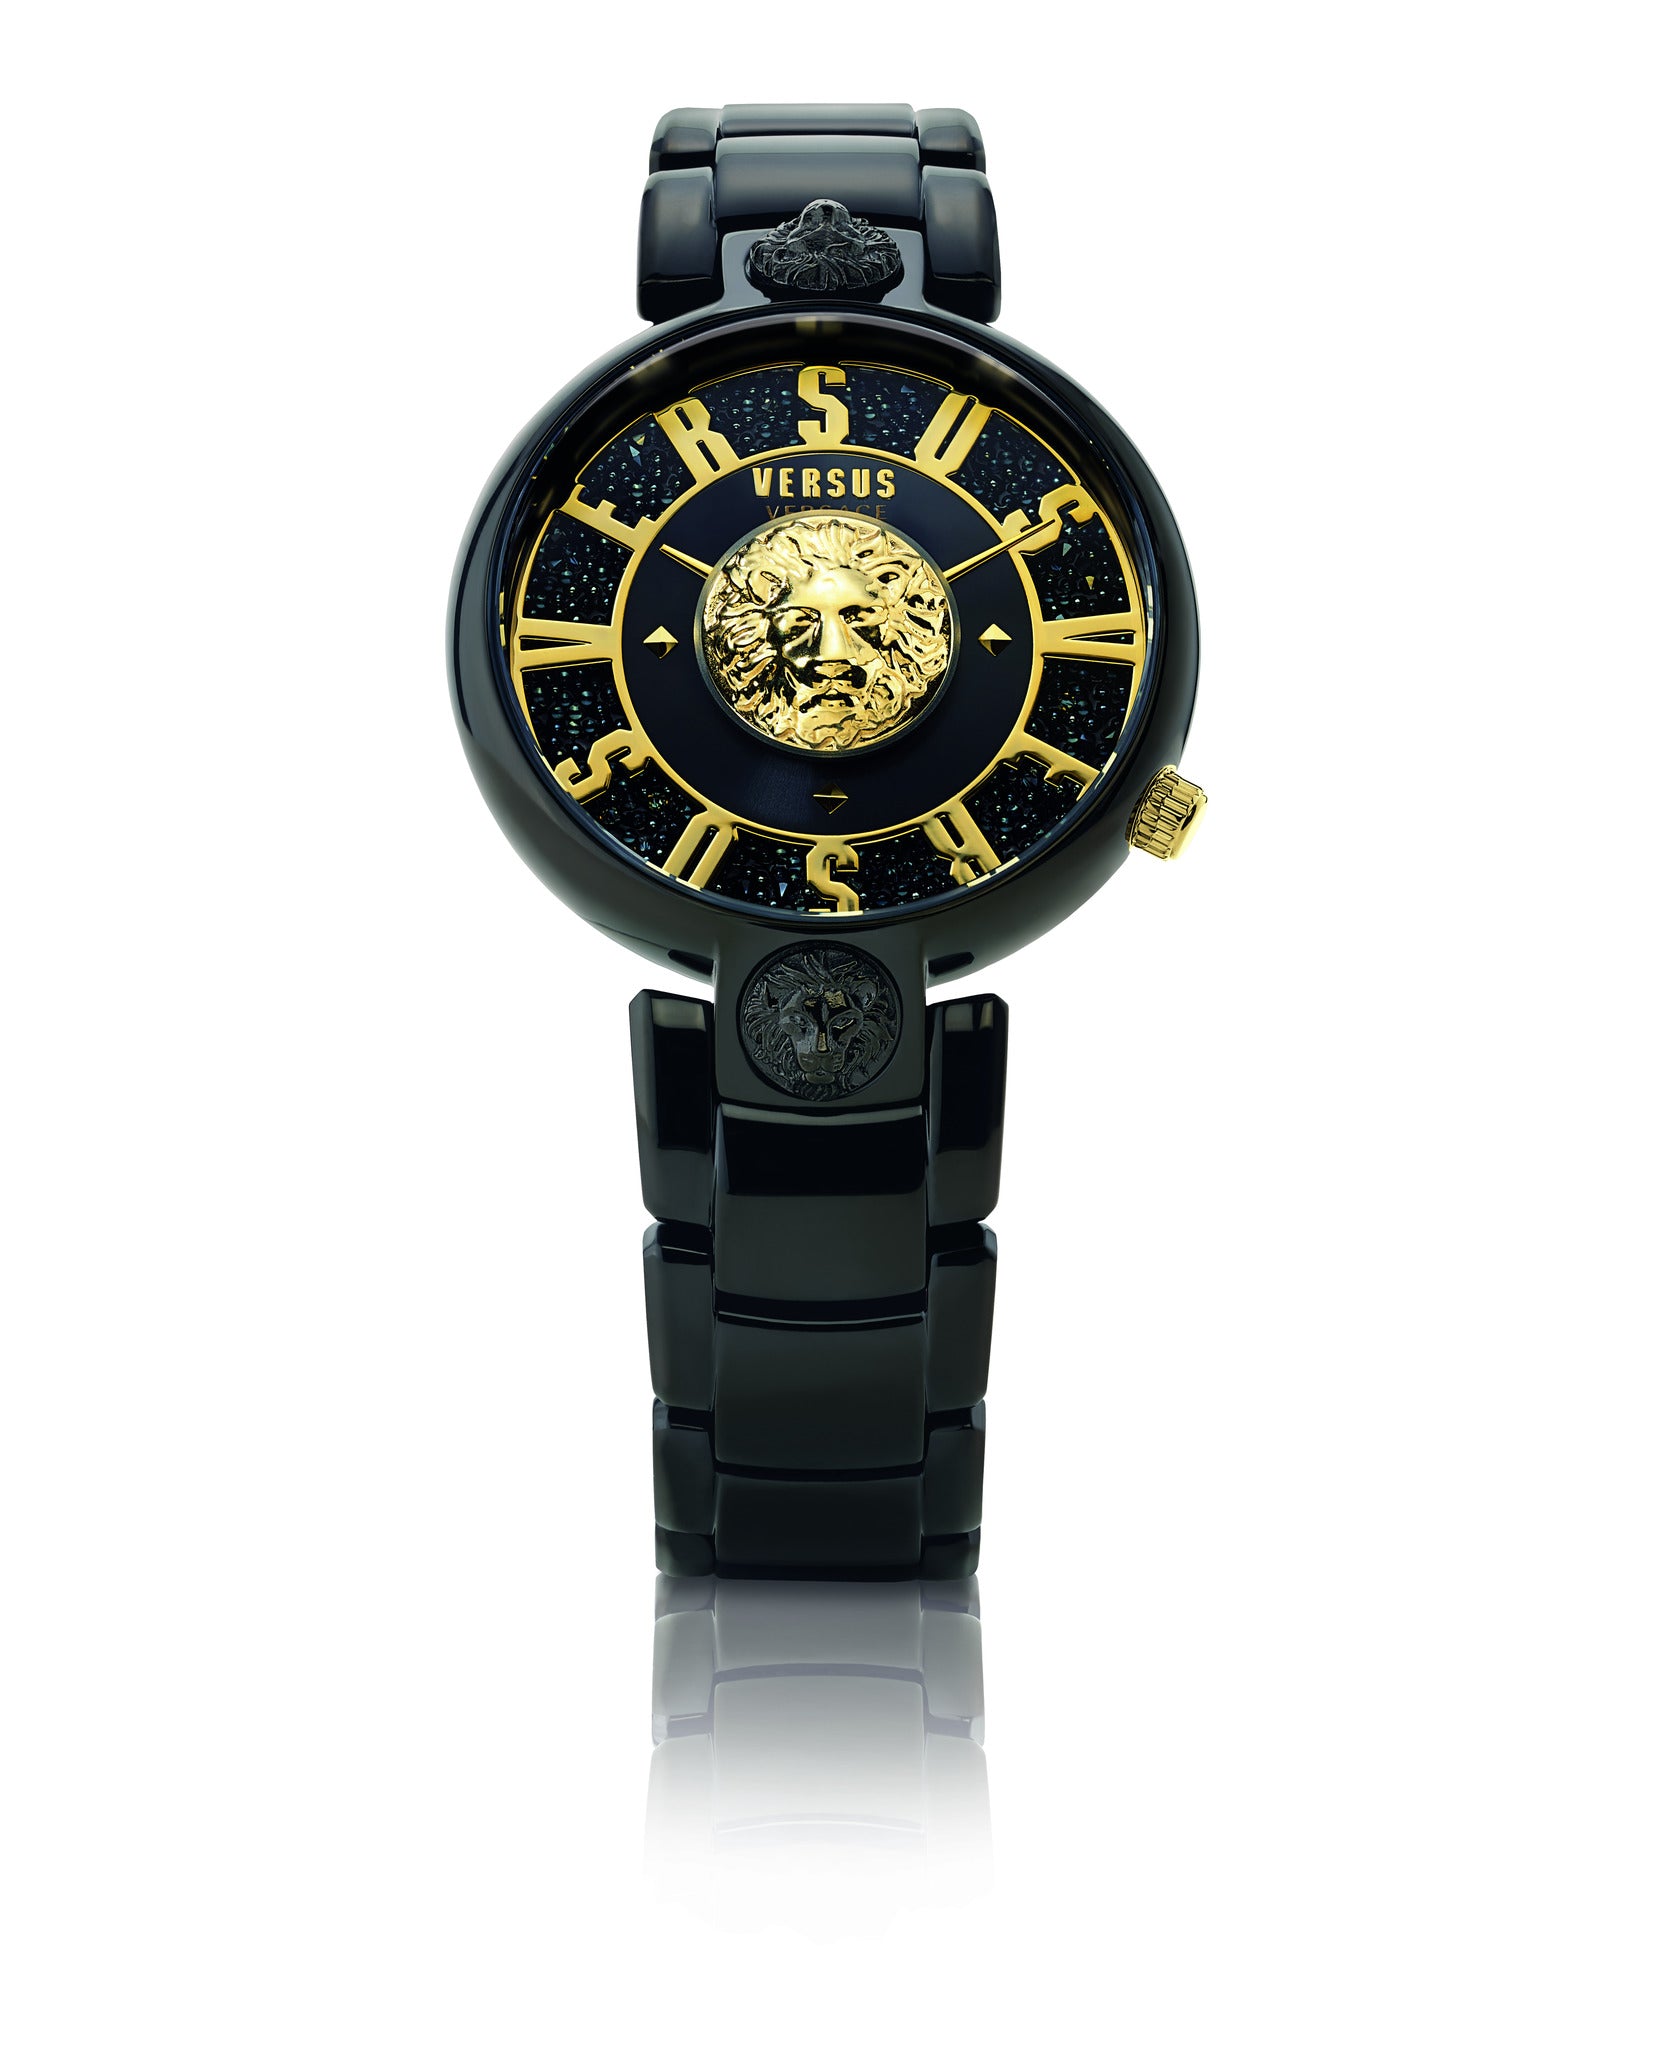 Lodovica Bracelet Watch